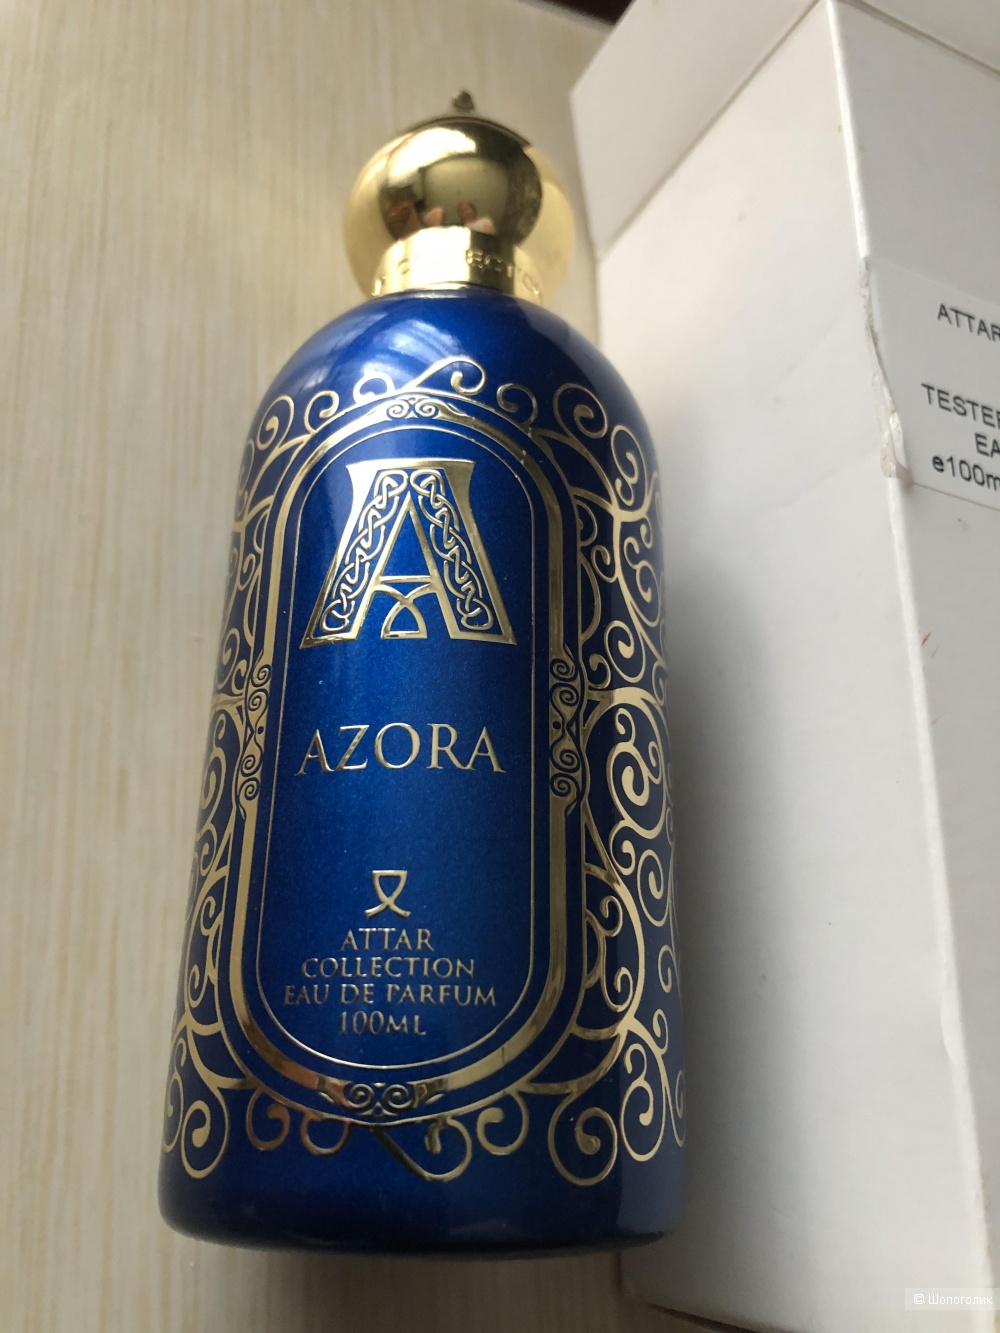 EDP Azora Attar Collection,100ml